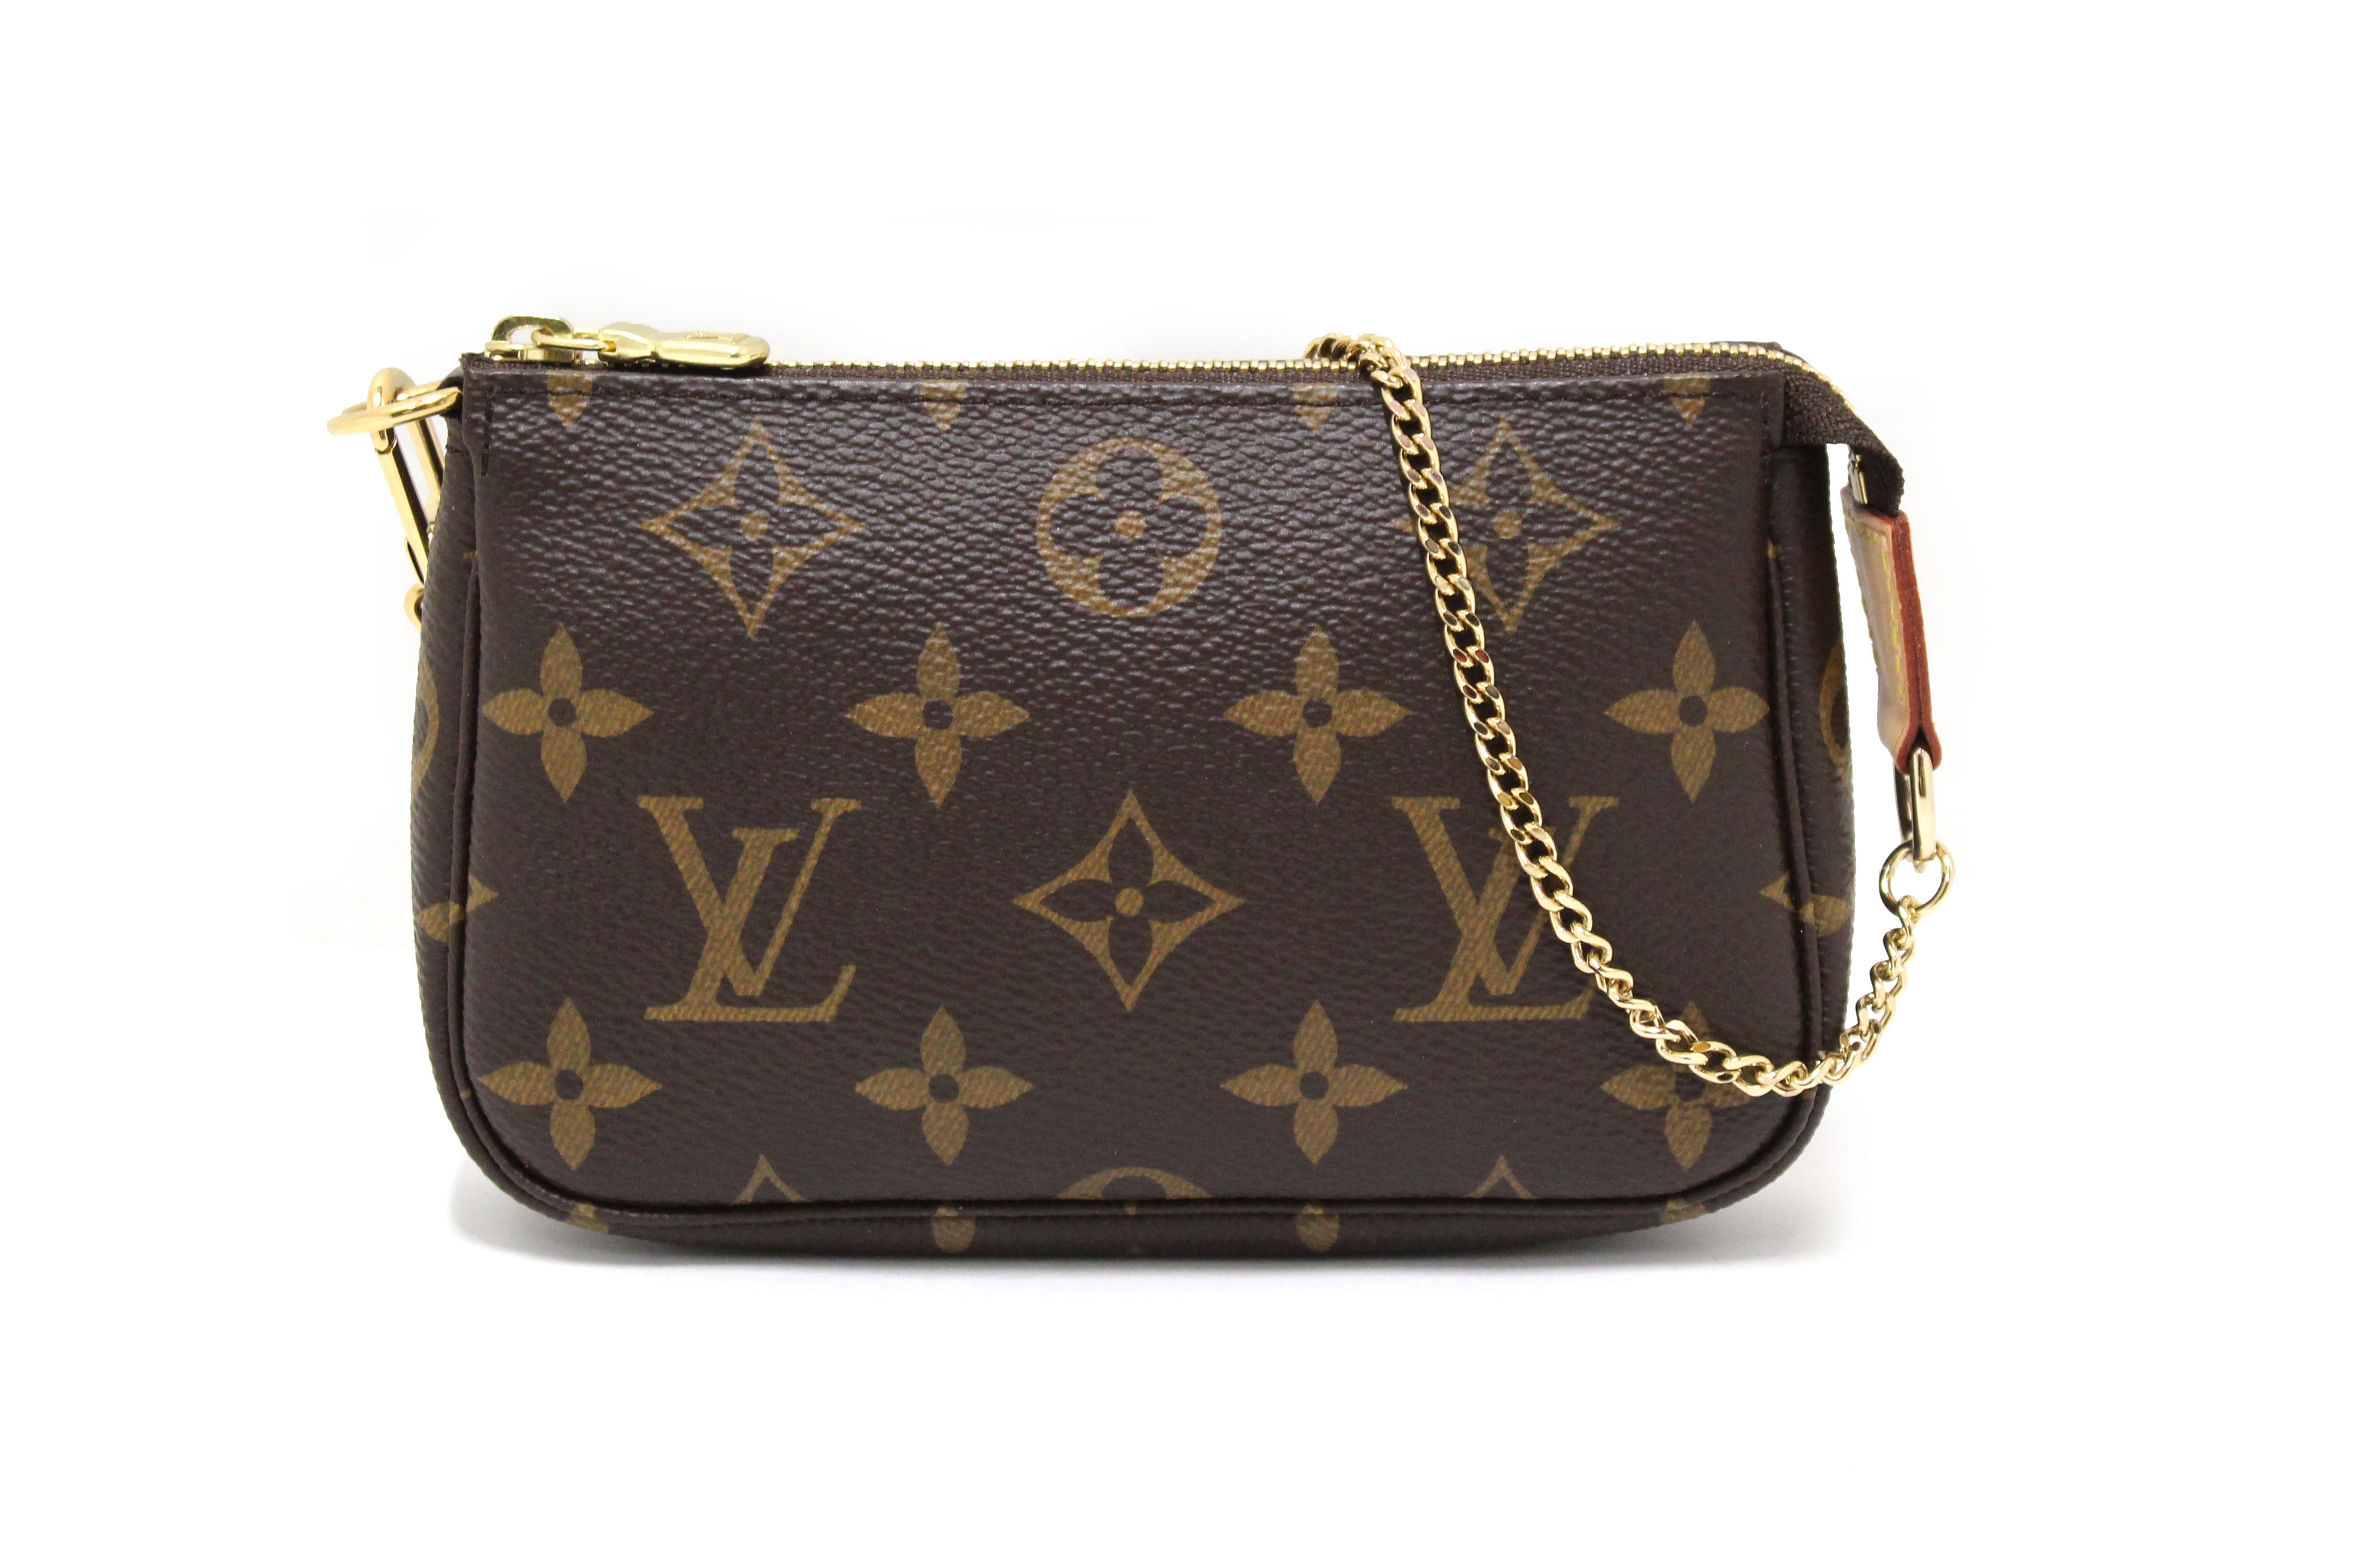 Louis Vuitton Classic Bag Prices